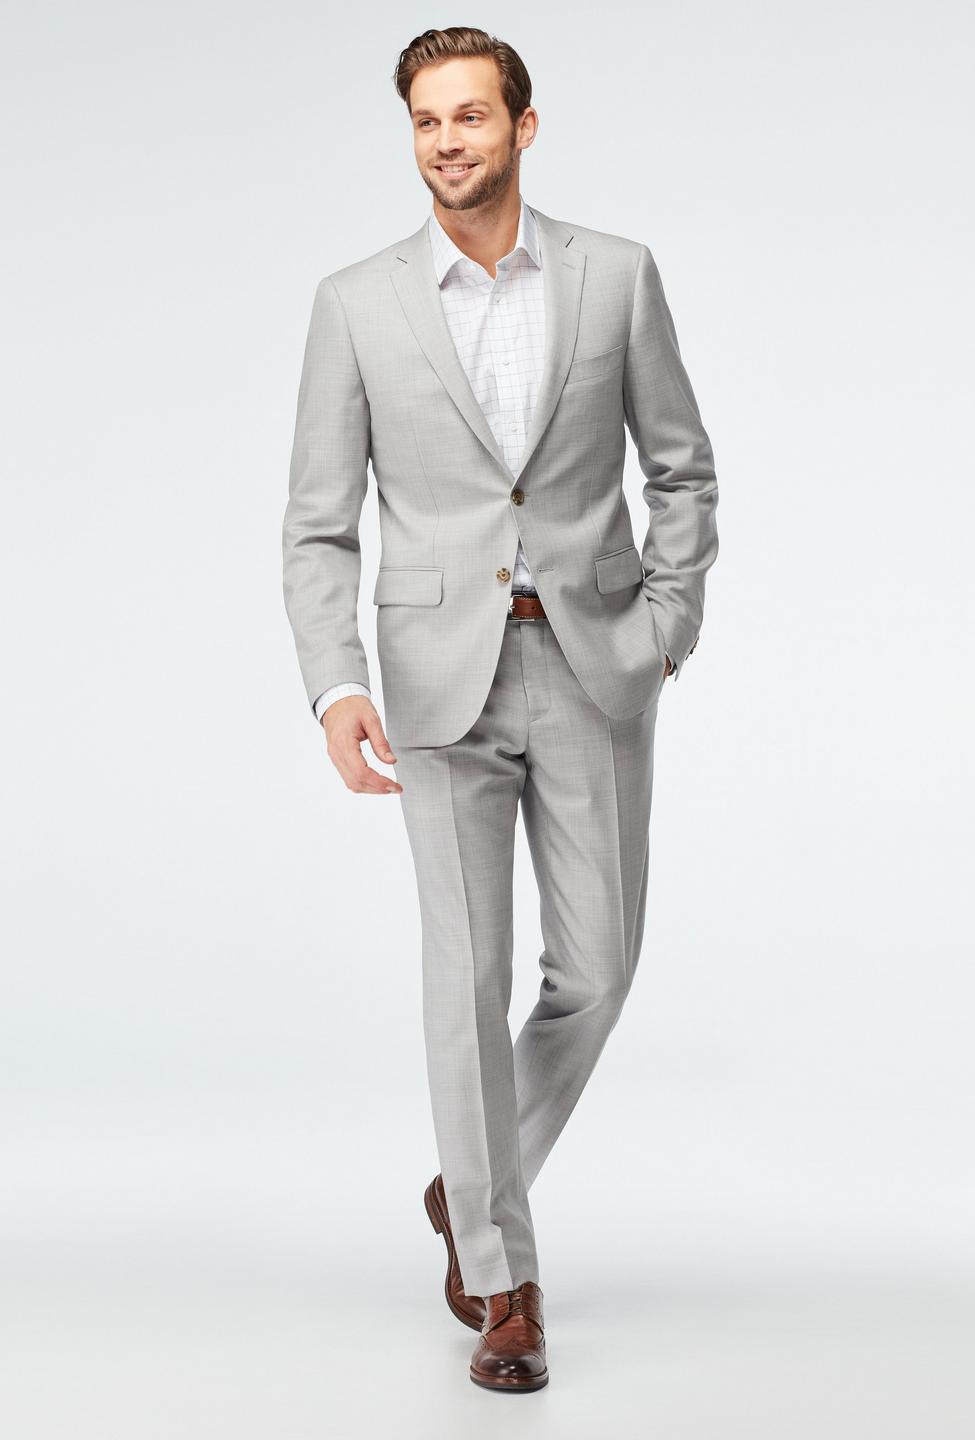 Harrogate Light Gray Suit